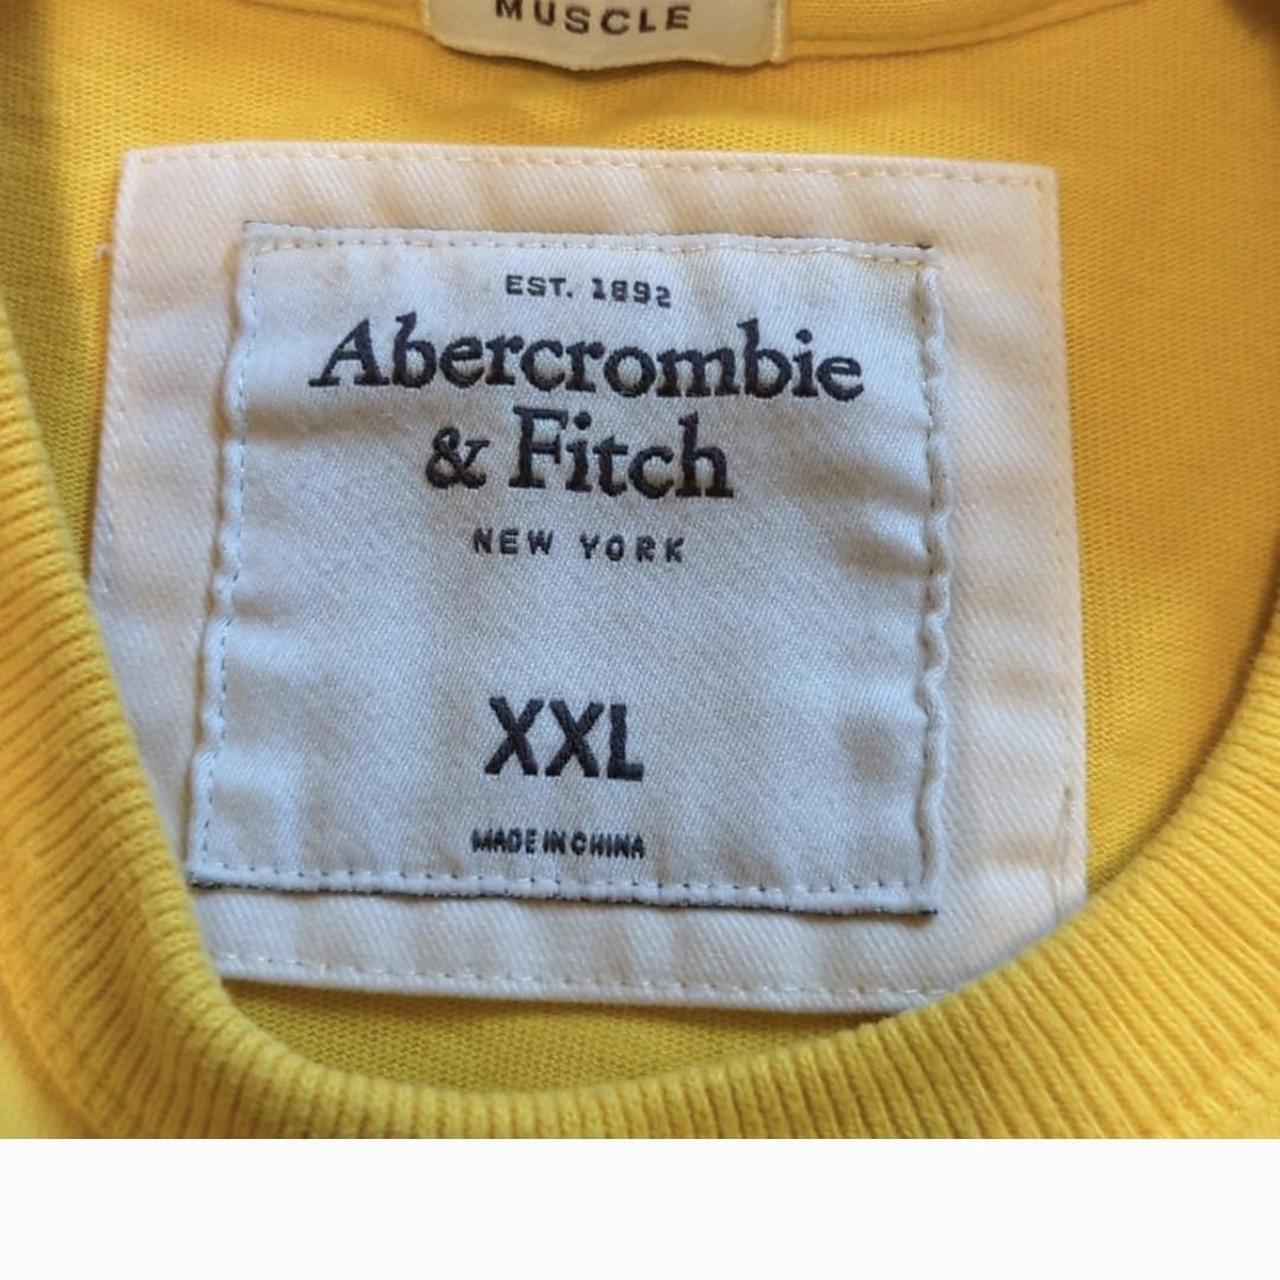 Abercrombie & Fitch moose logo shirt - Depop